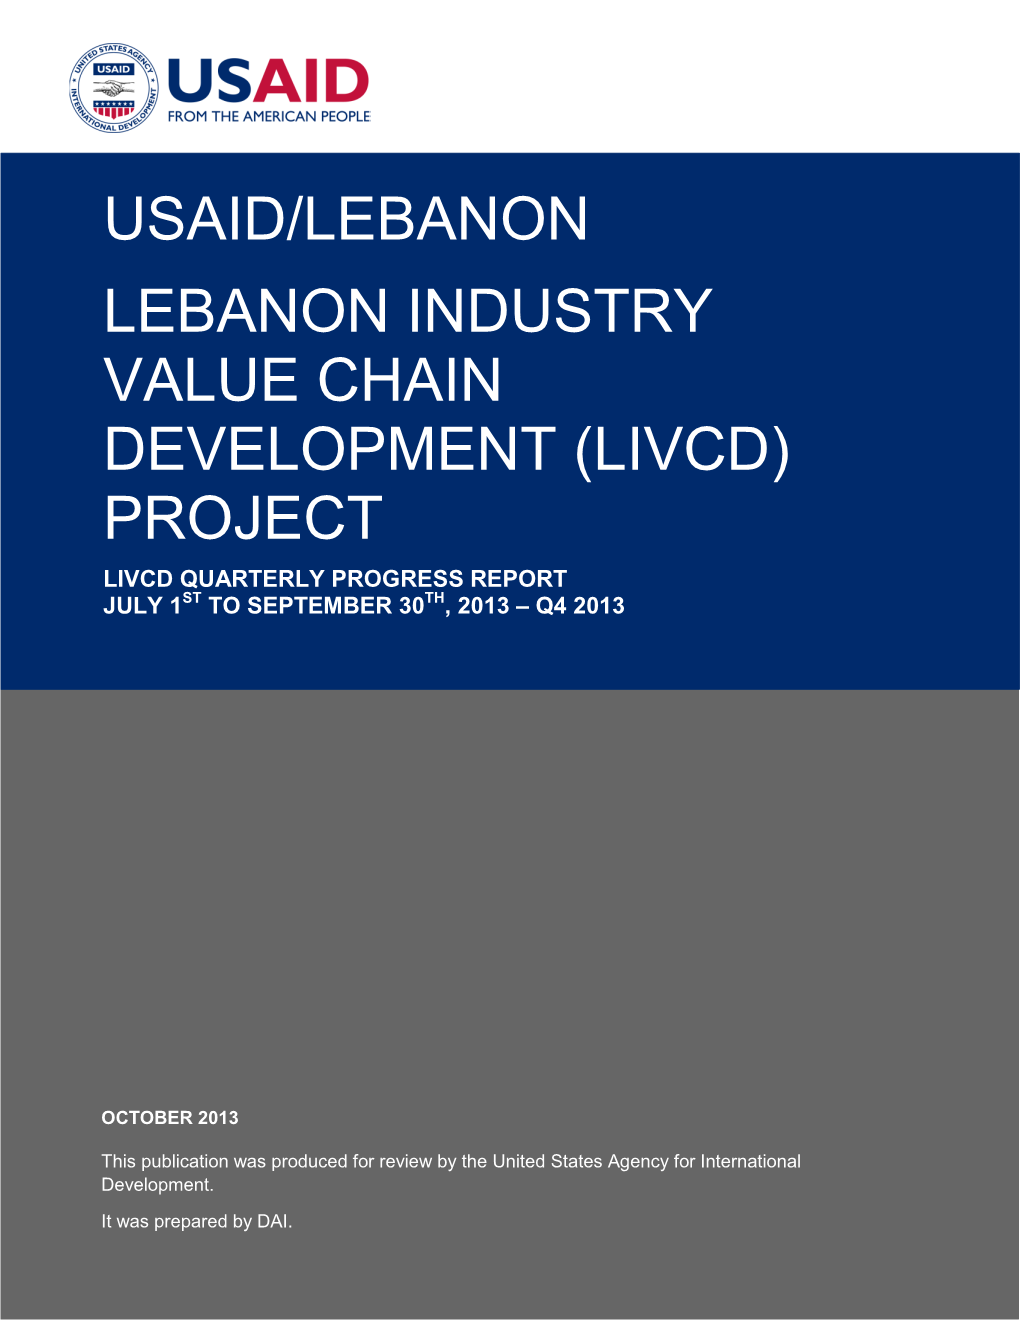 Usaid/Lebanon Lebanon Industry Value Chain Development (Livcd) Project